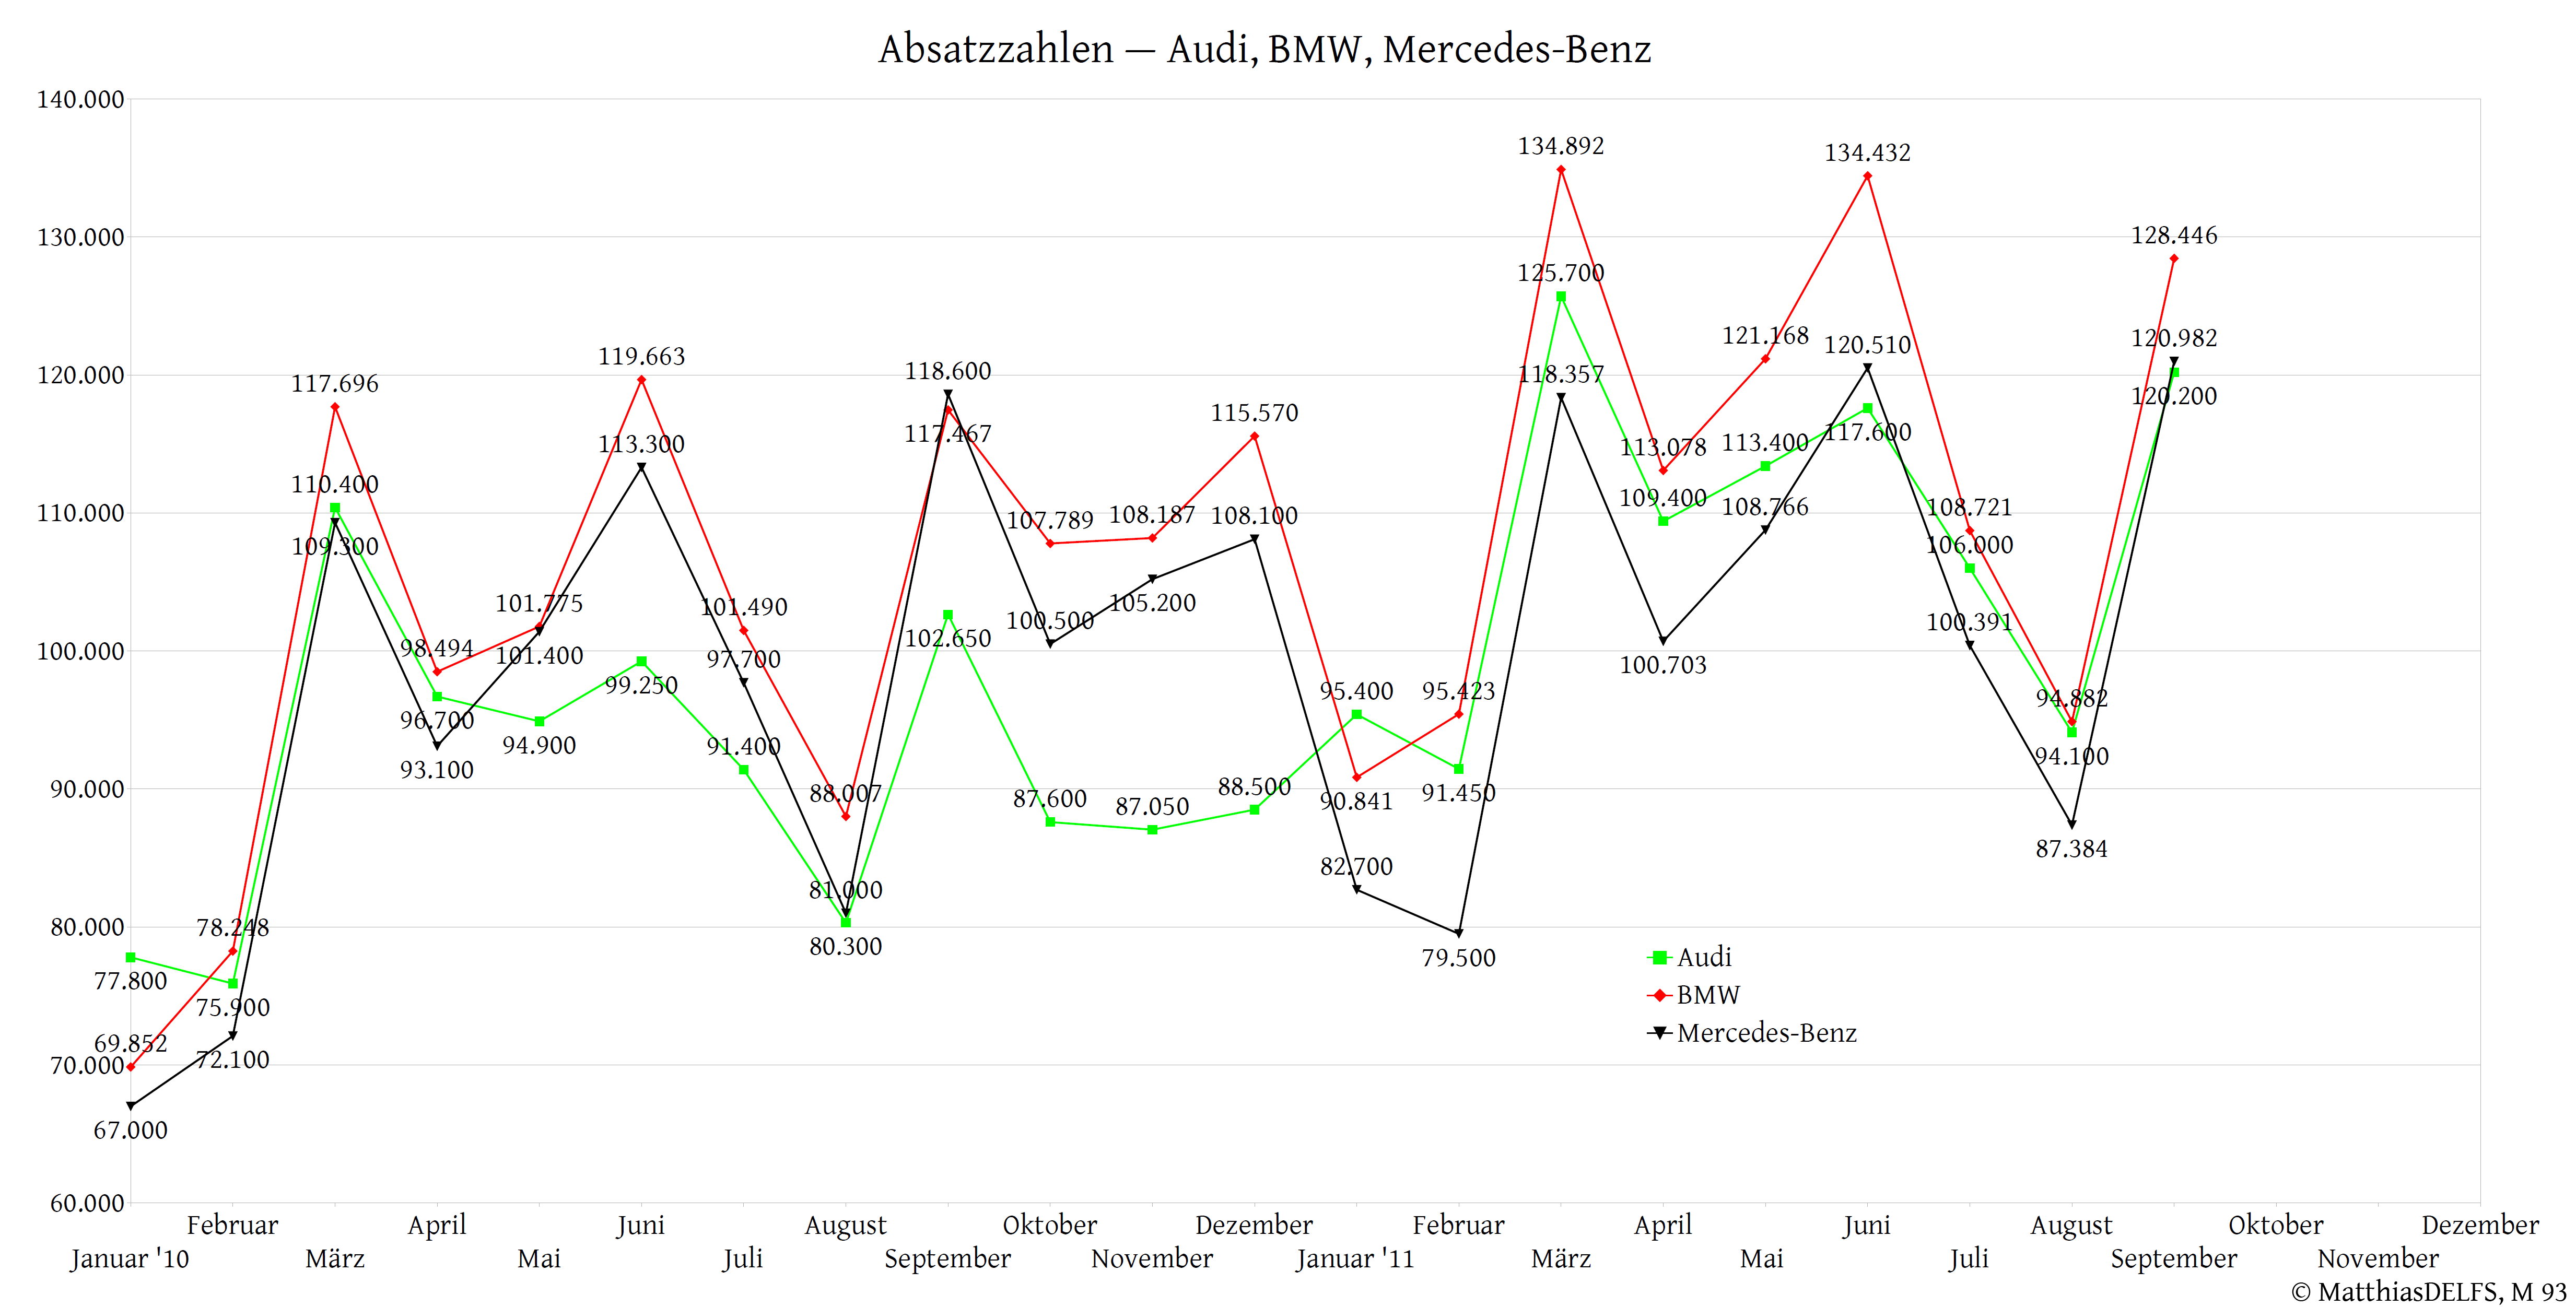 Verkaufszahlen bmw mercedes audi 2011 #2